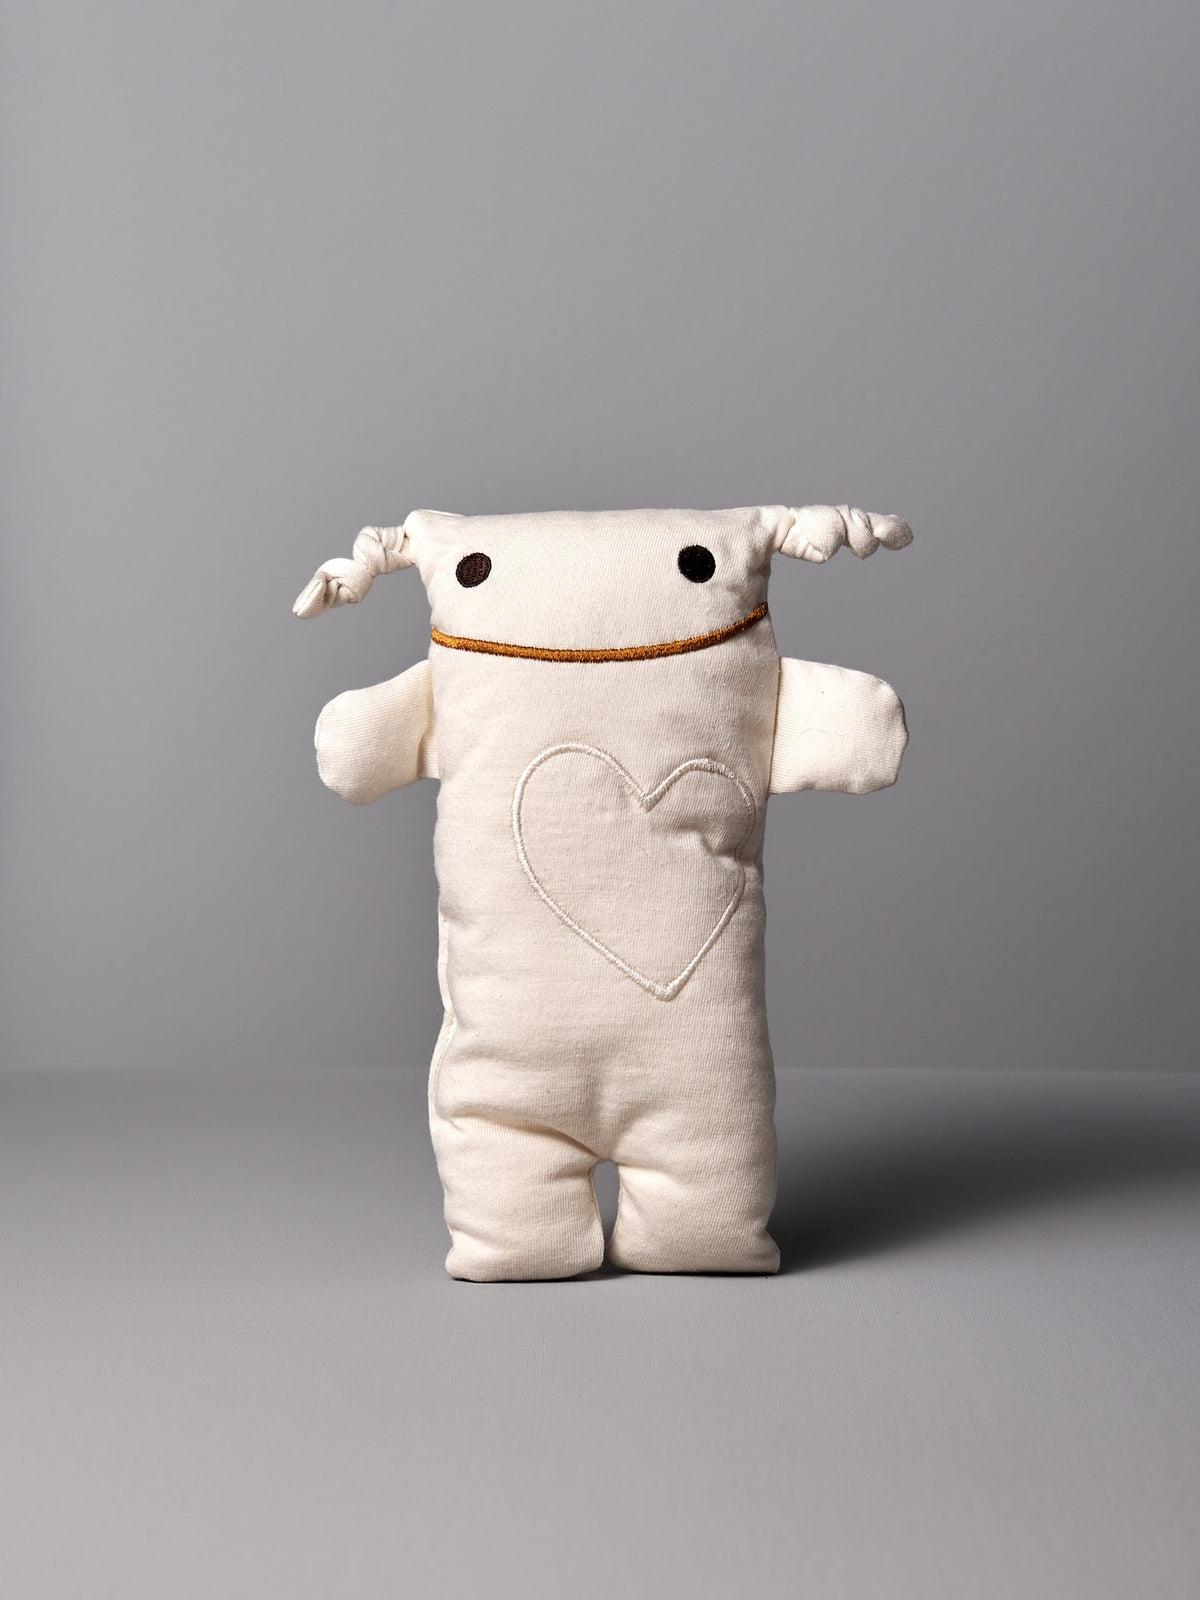 A Monsieur Tsé-Tsé Classic stuffed animal with a heart on it, made by Raplapla.